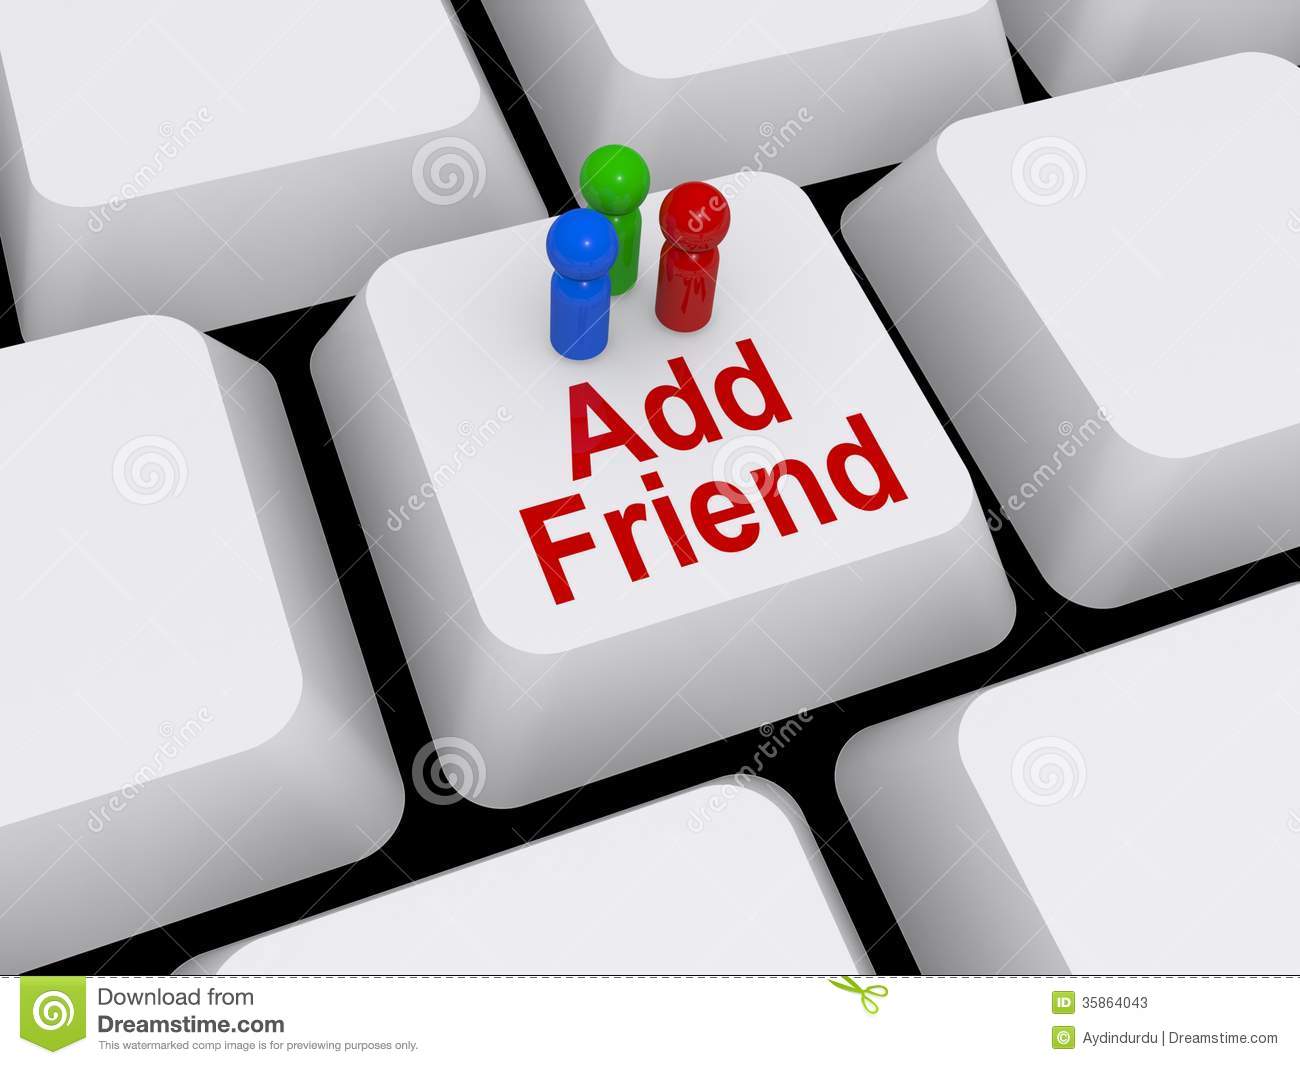 Add friend token facebook - FPlus Token & Cookie 